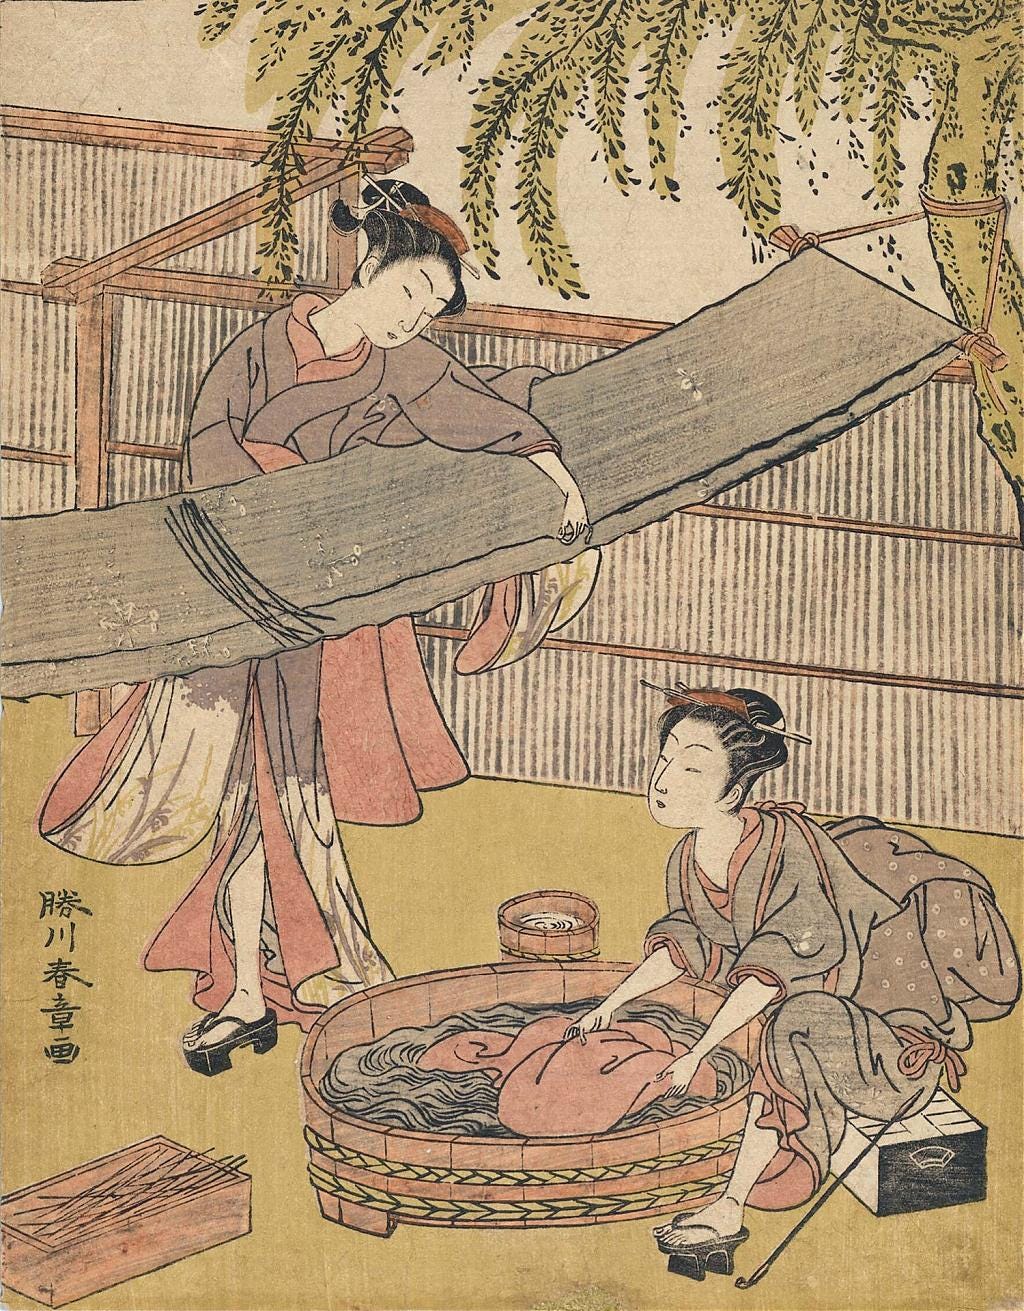 220114-0010-OS - Japanese women washing clothes, 18th century